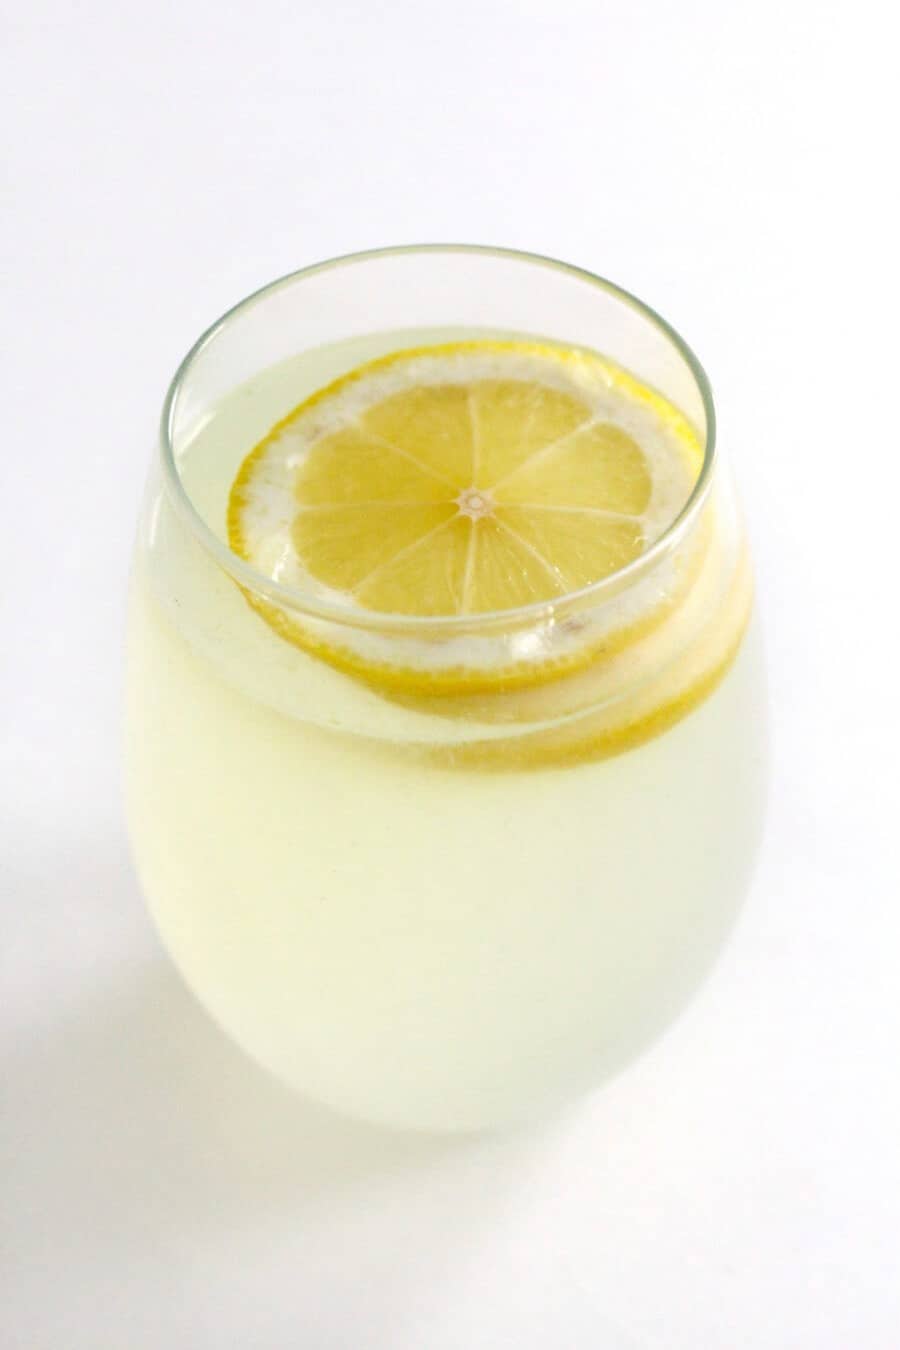 yellow lemon lemonade in a tall glass with a slice of lemon inside.